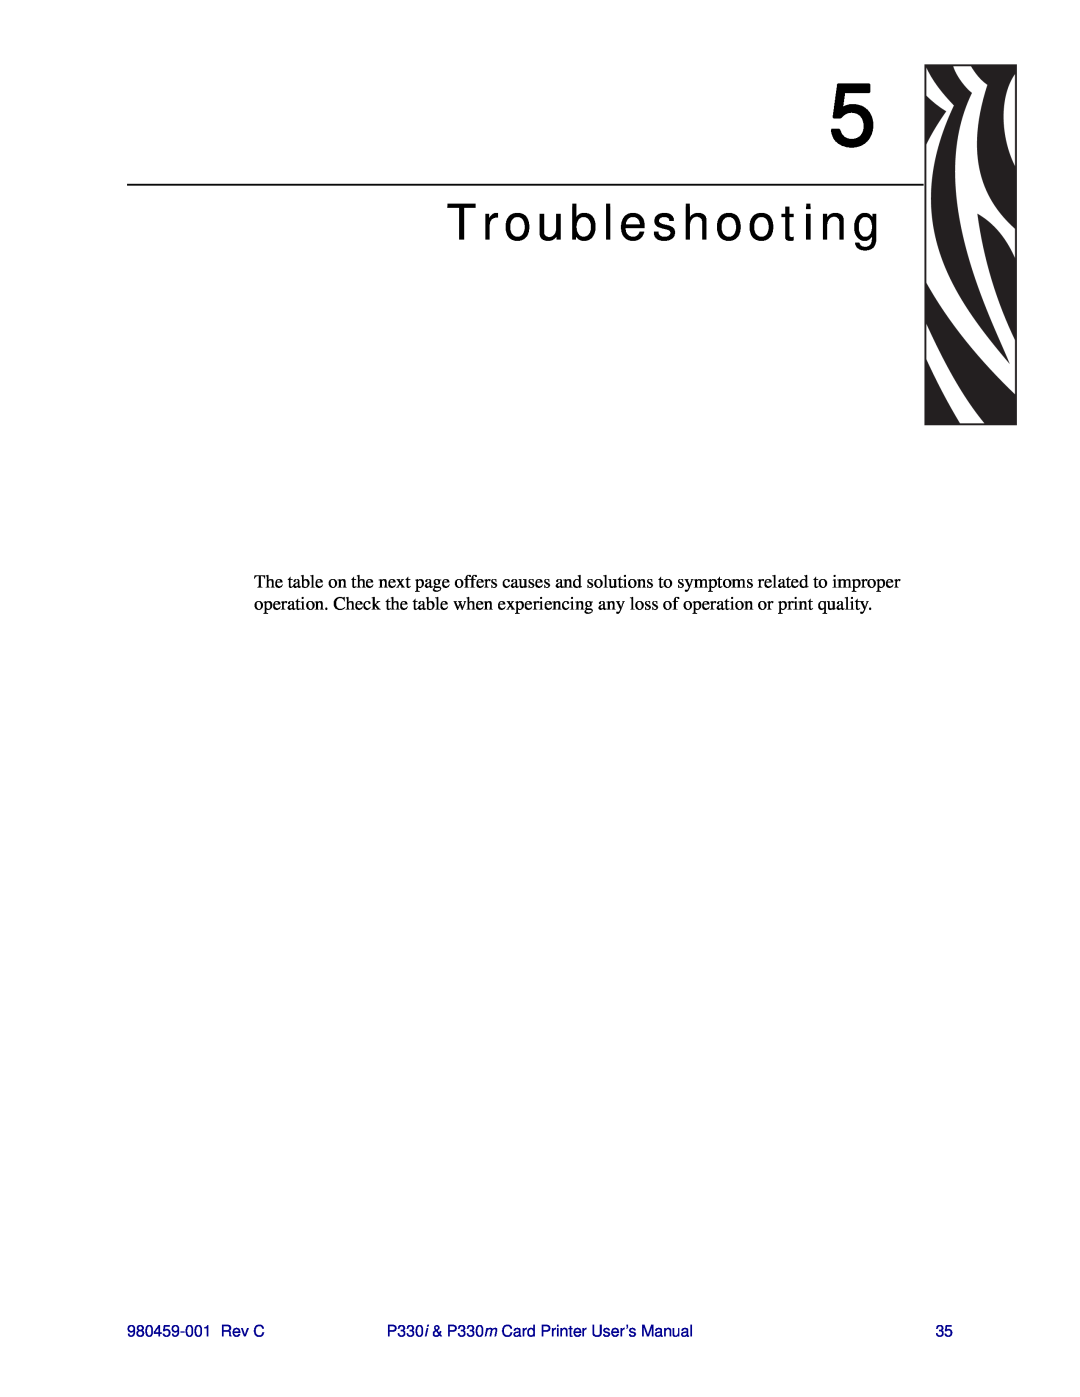 Zebra Technologies user manual Troubleshooting, Rev C, P330i & P330m Card Printer User’s Manual 